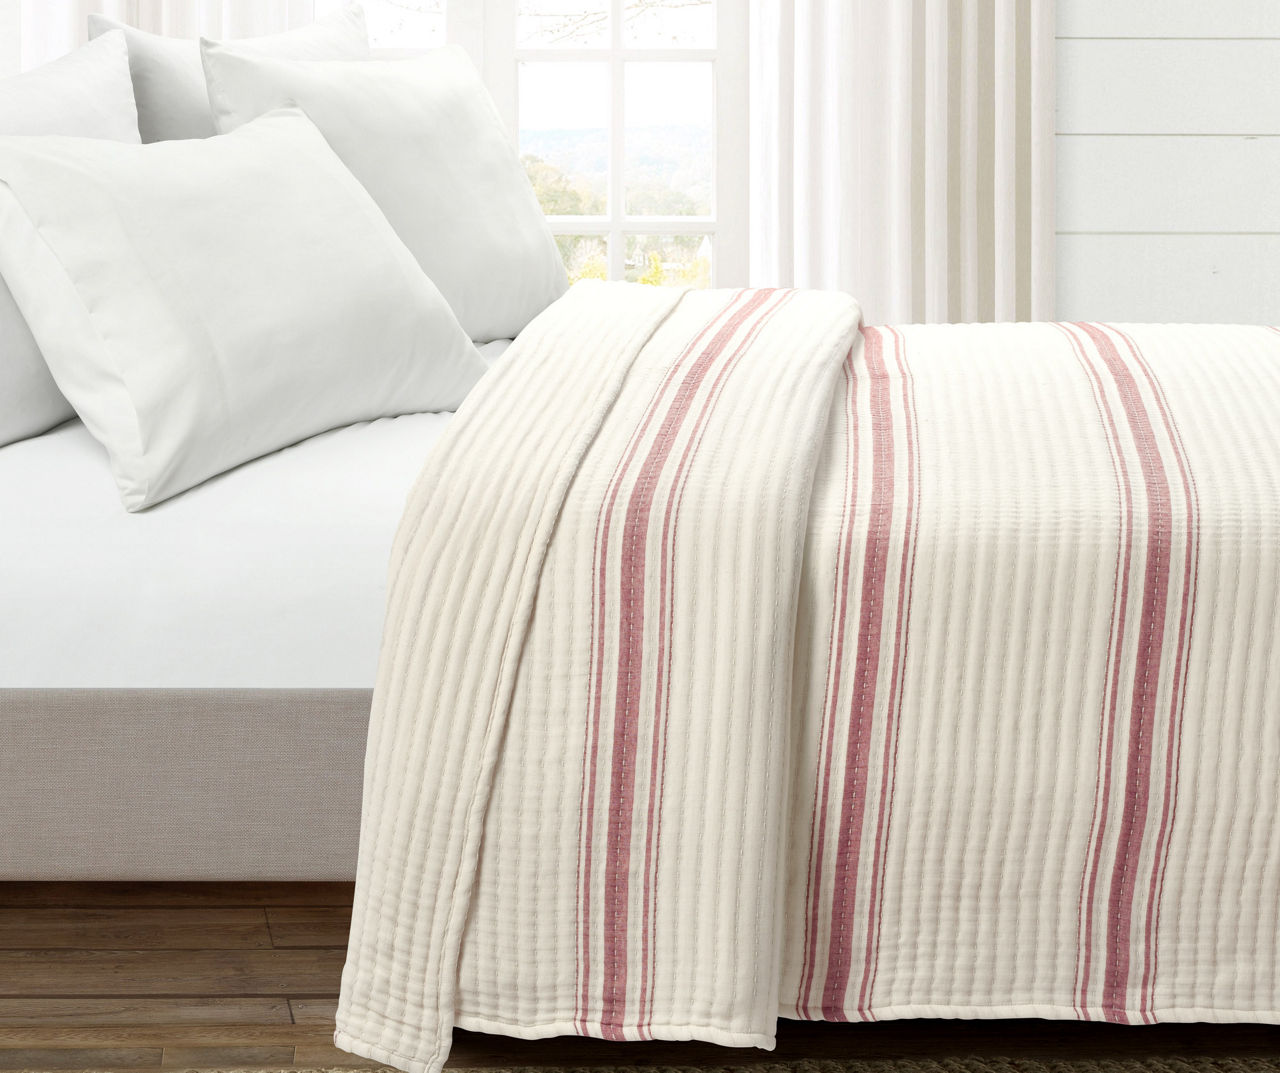 Lush Decor Farmhouse Stripe Comforter Red Set Full/Queen